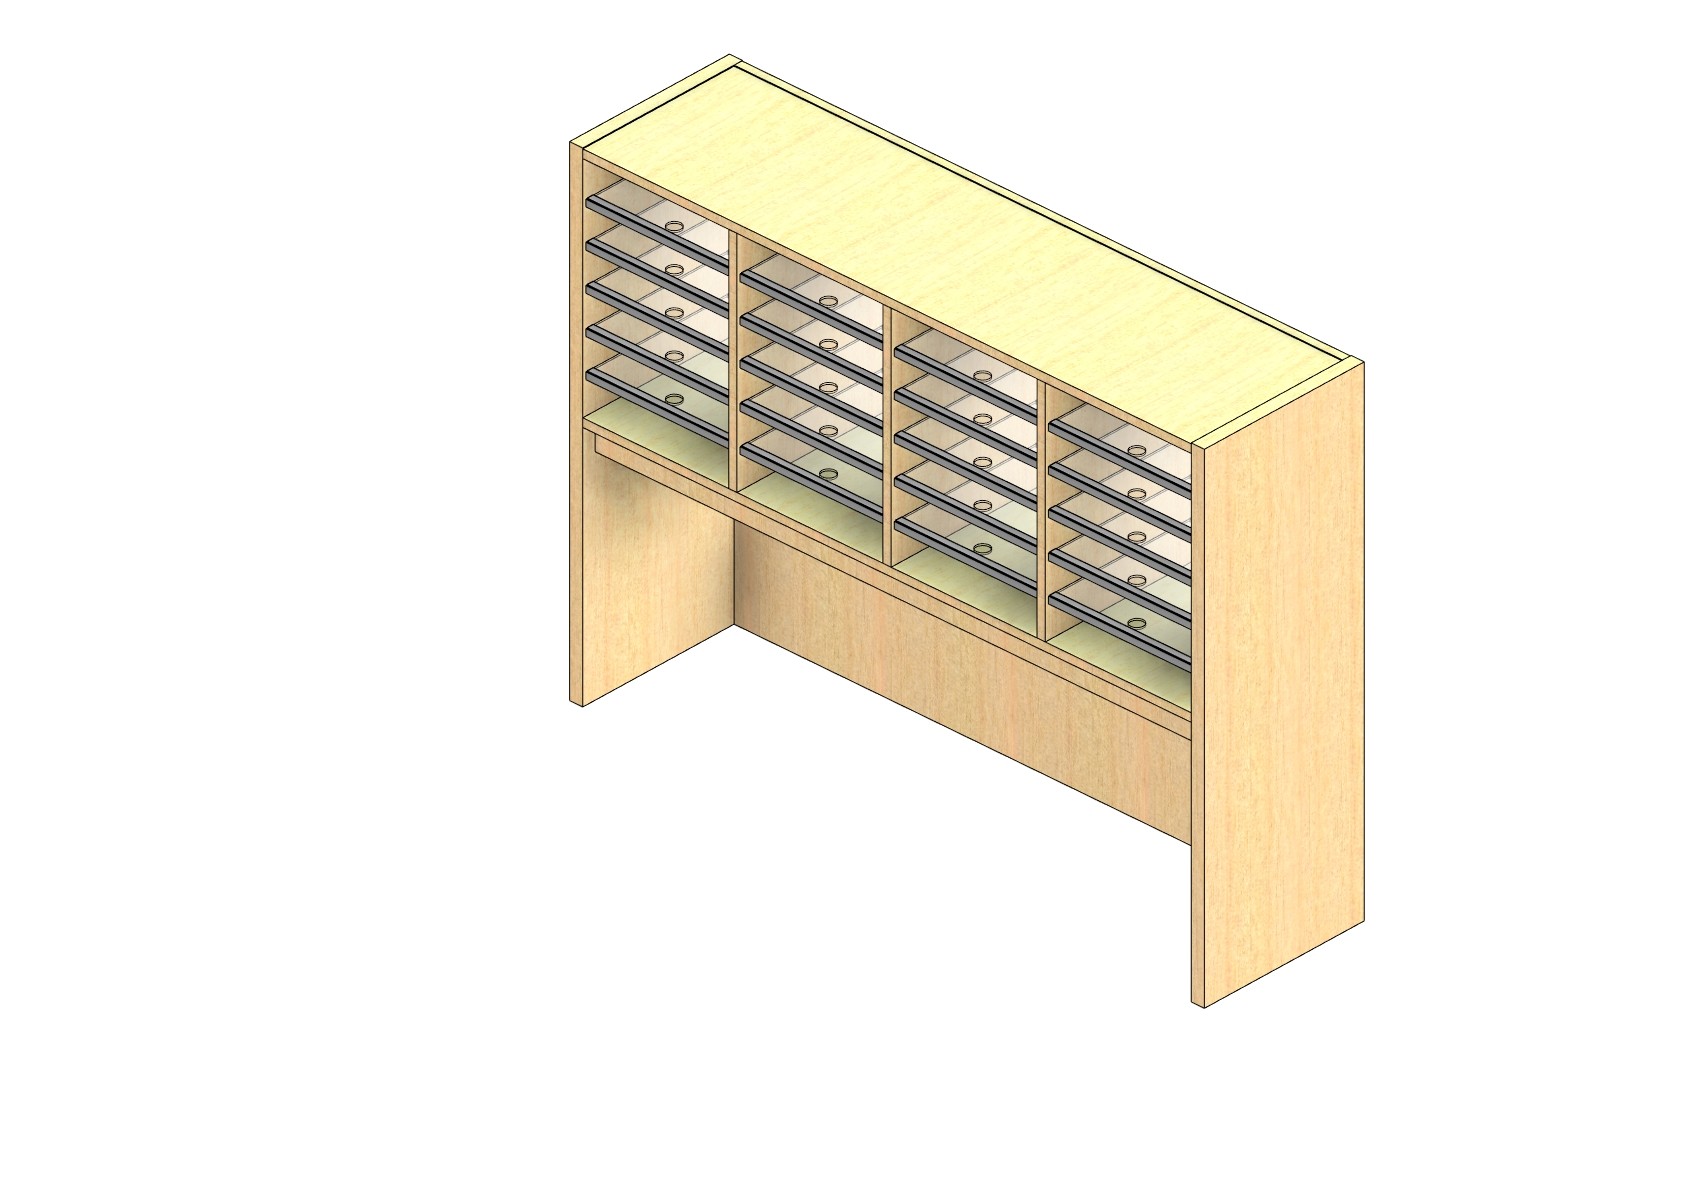 Standard Sized Open Back Sort Module - 4 Columns - 18" Sorting Height w/ 18" Riser